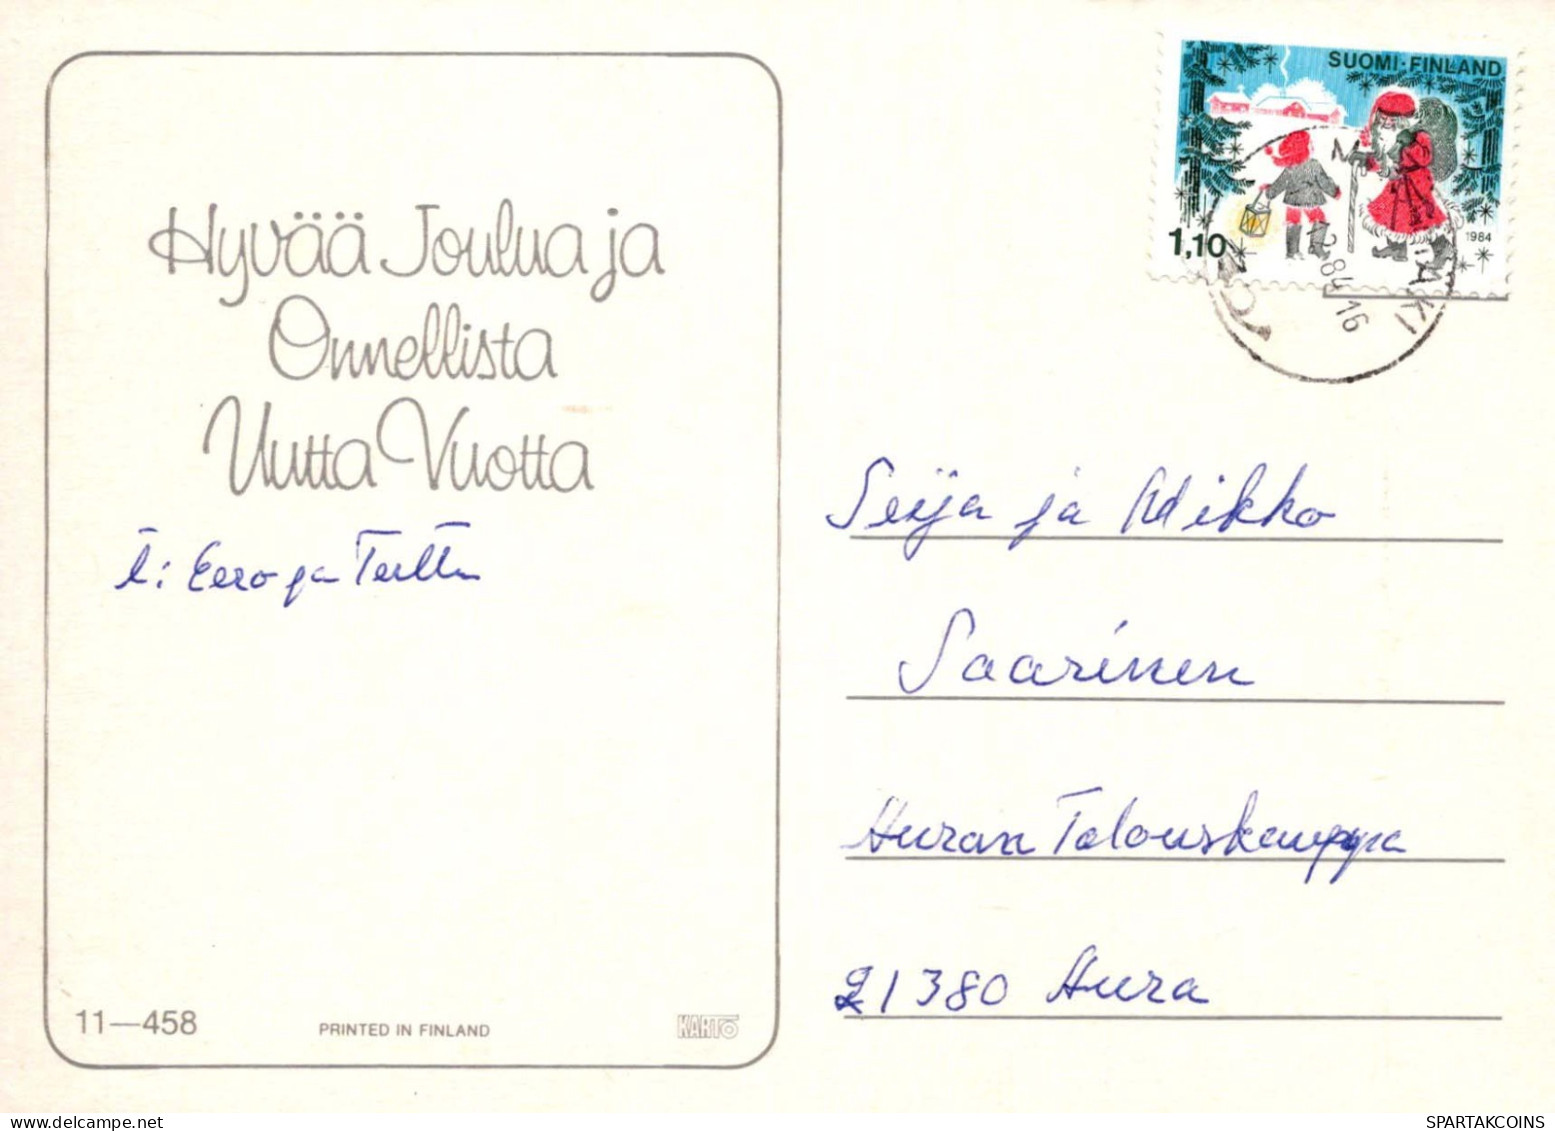 Buon Anno Natale CANDELA Vintage Cartolina CPSM #PBA243.IT - New Year